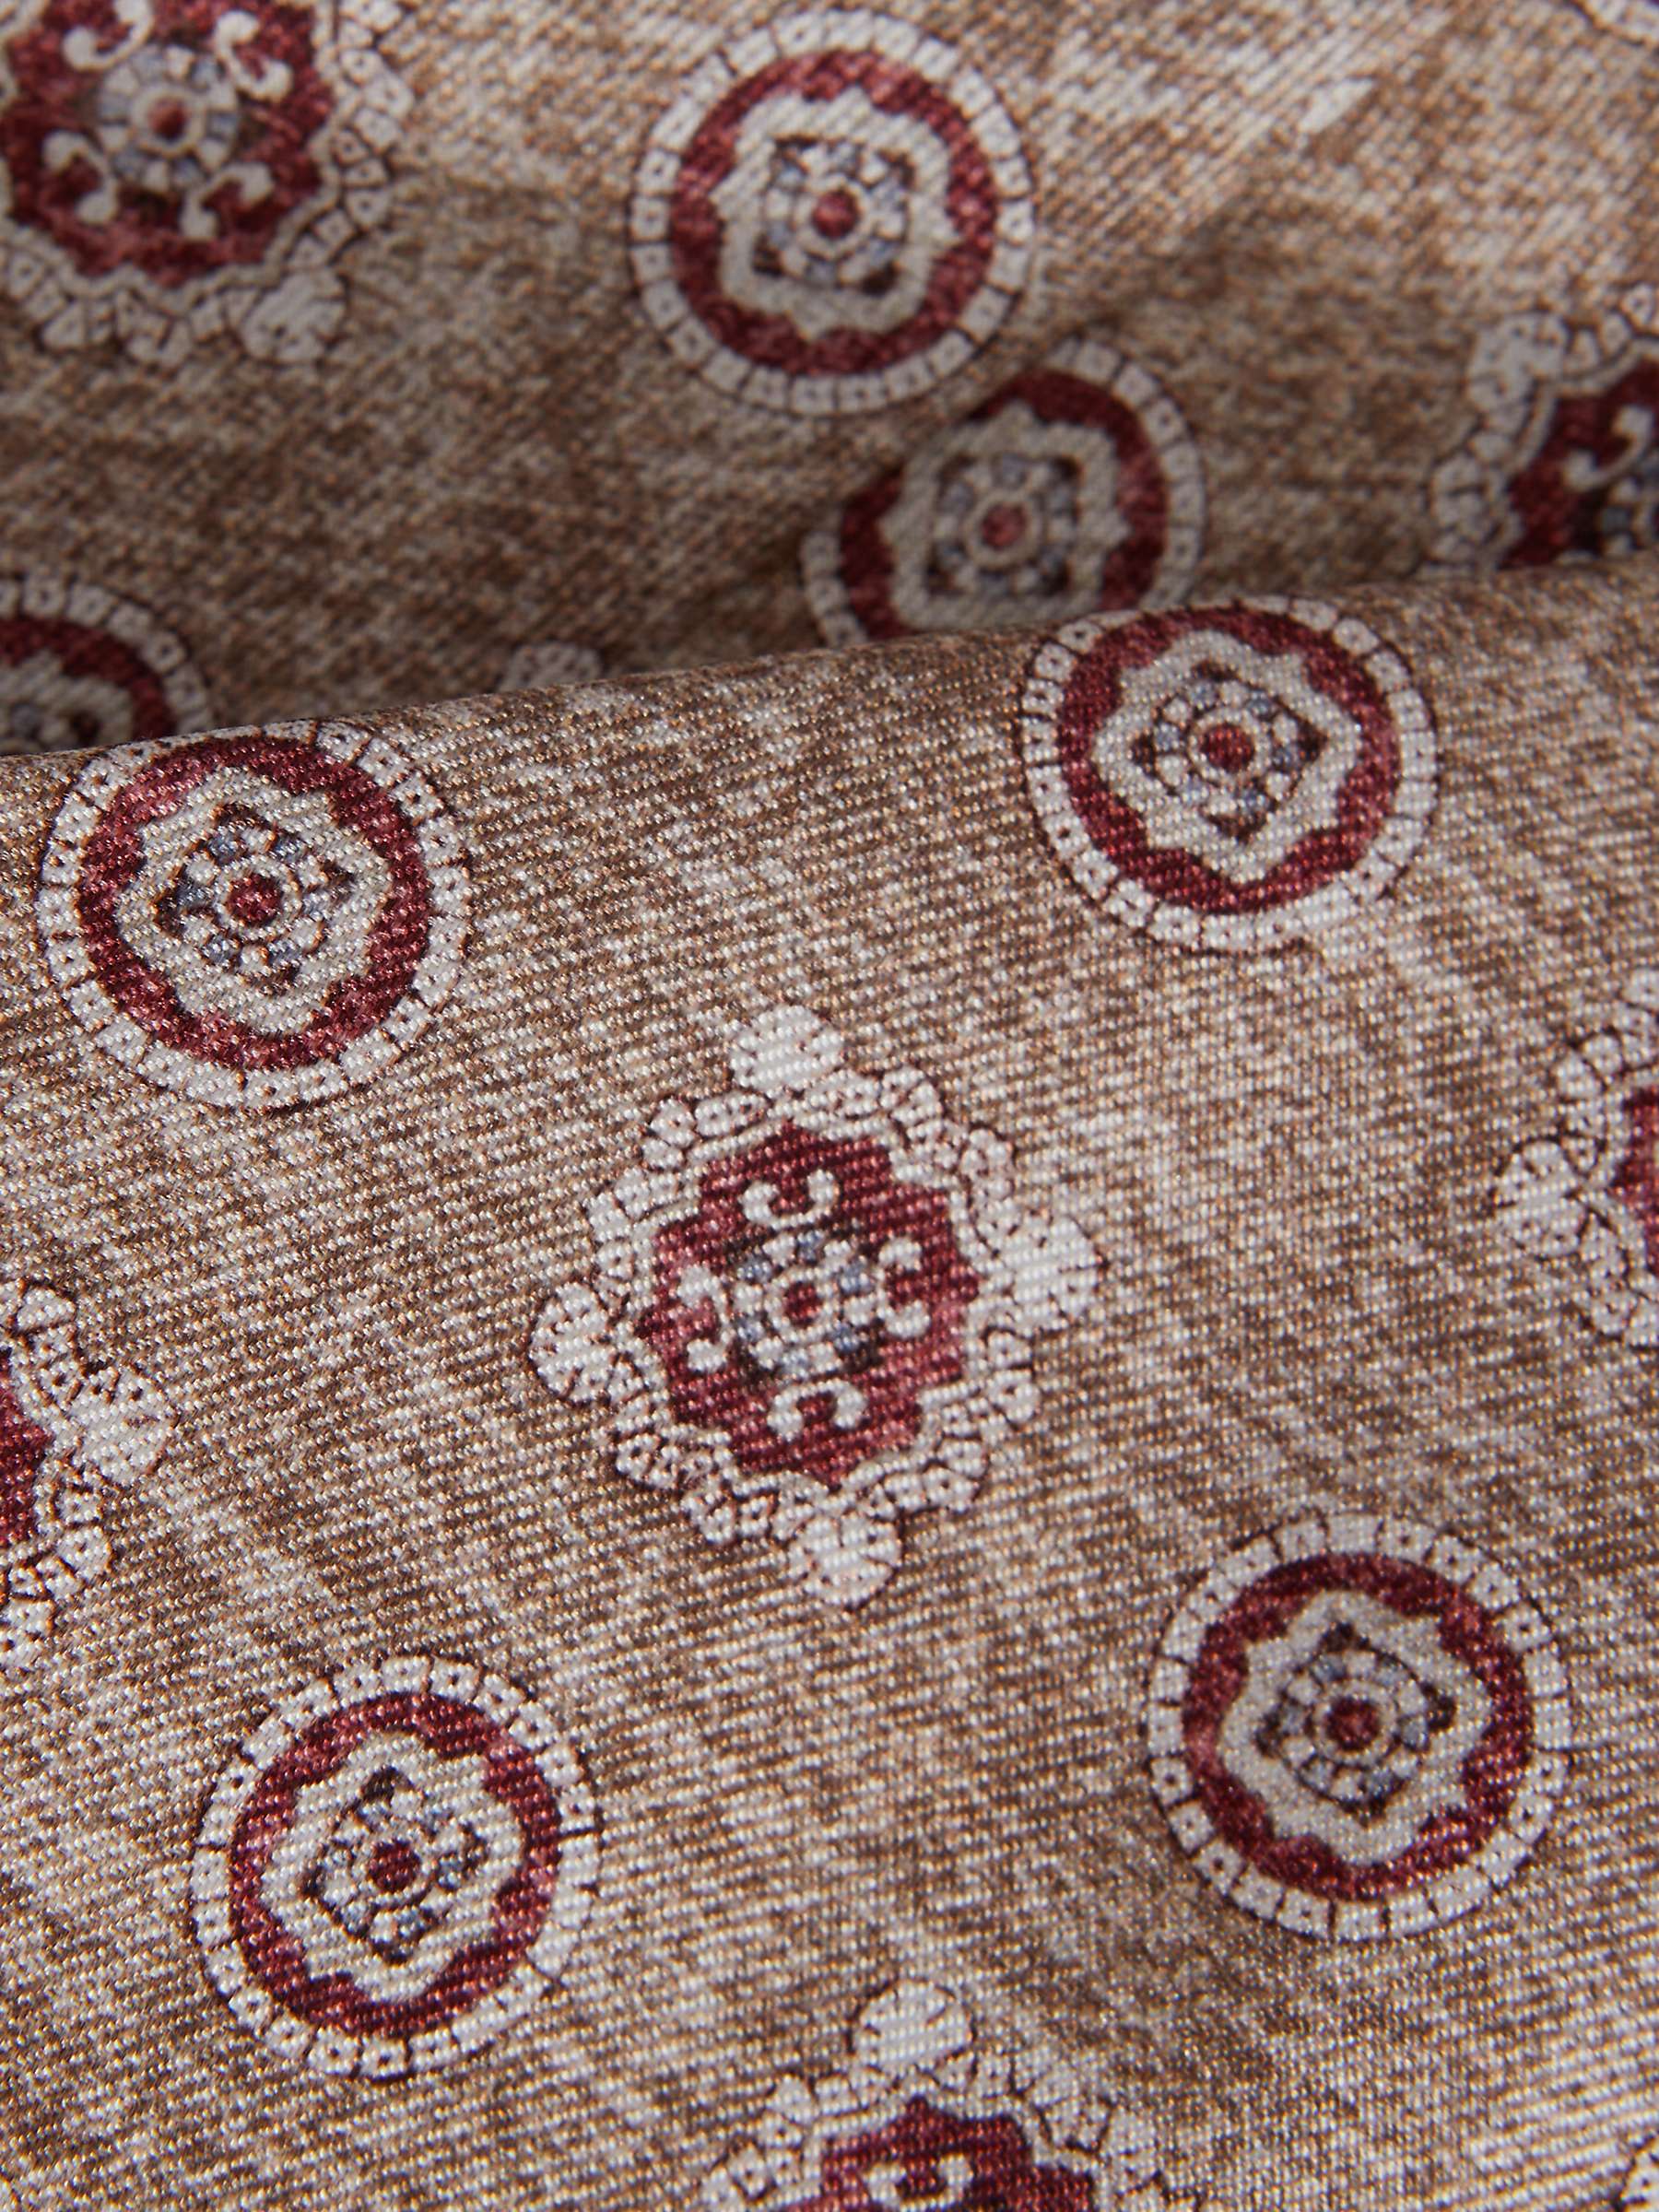 Buy Reiss Vasari Medallion Print Silk Tie, Oatmeal/Rose Online at johnlewis.com